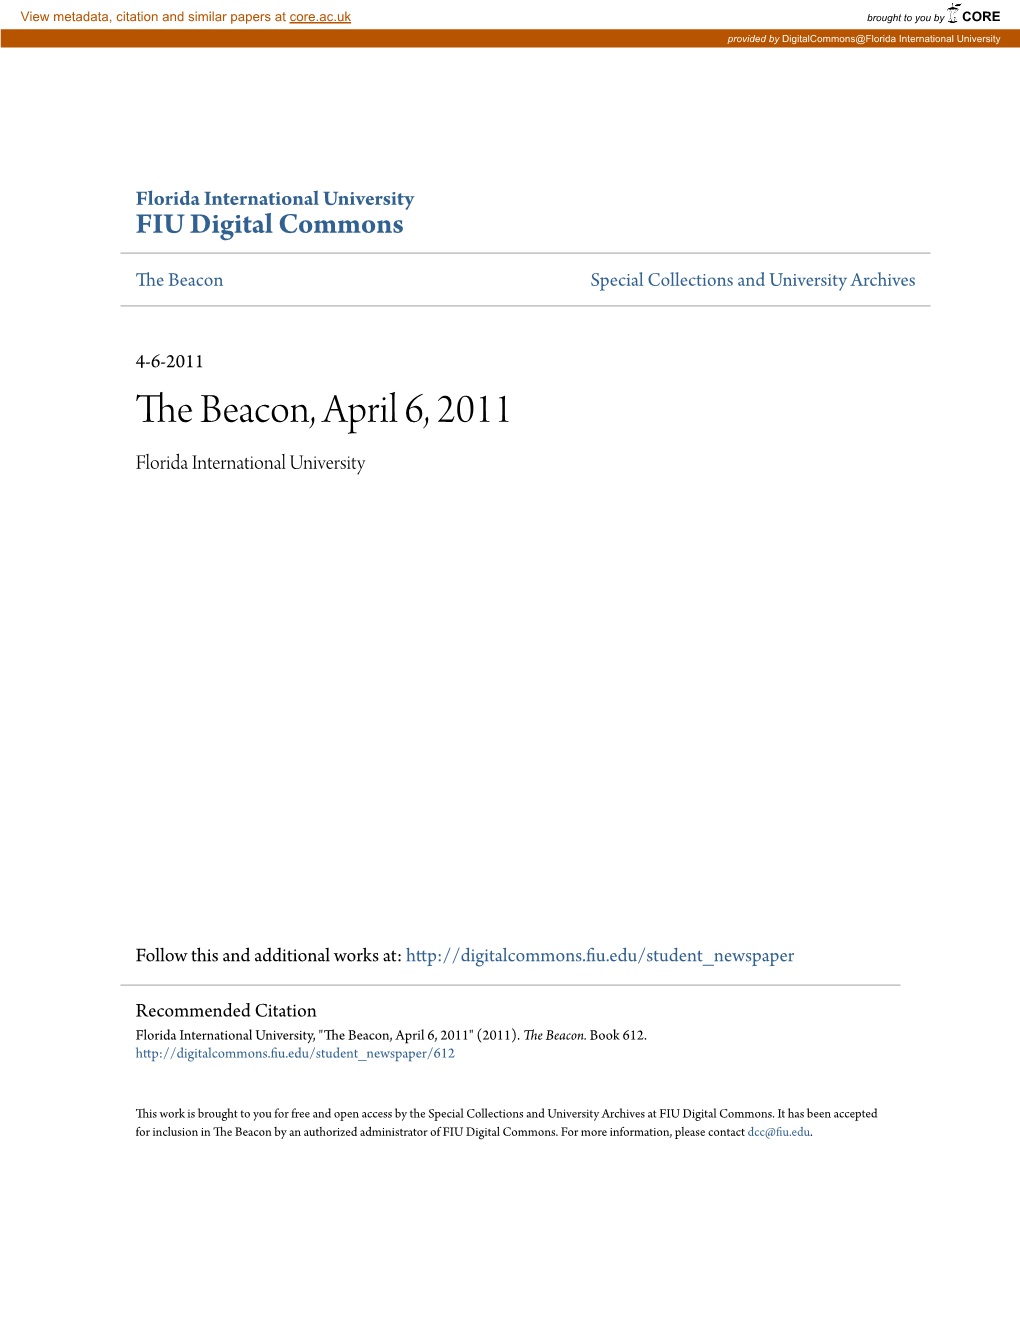 The Beacon, April 6, 2011 Florida International University